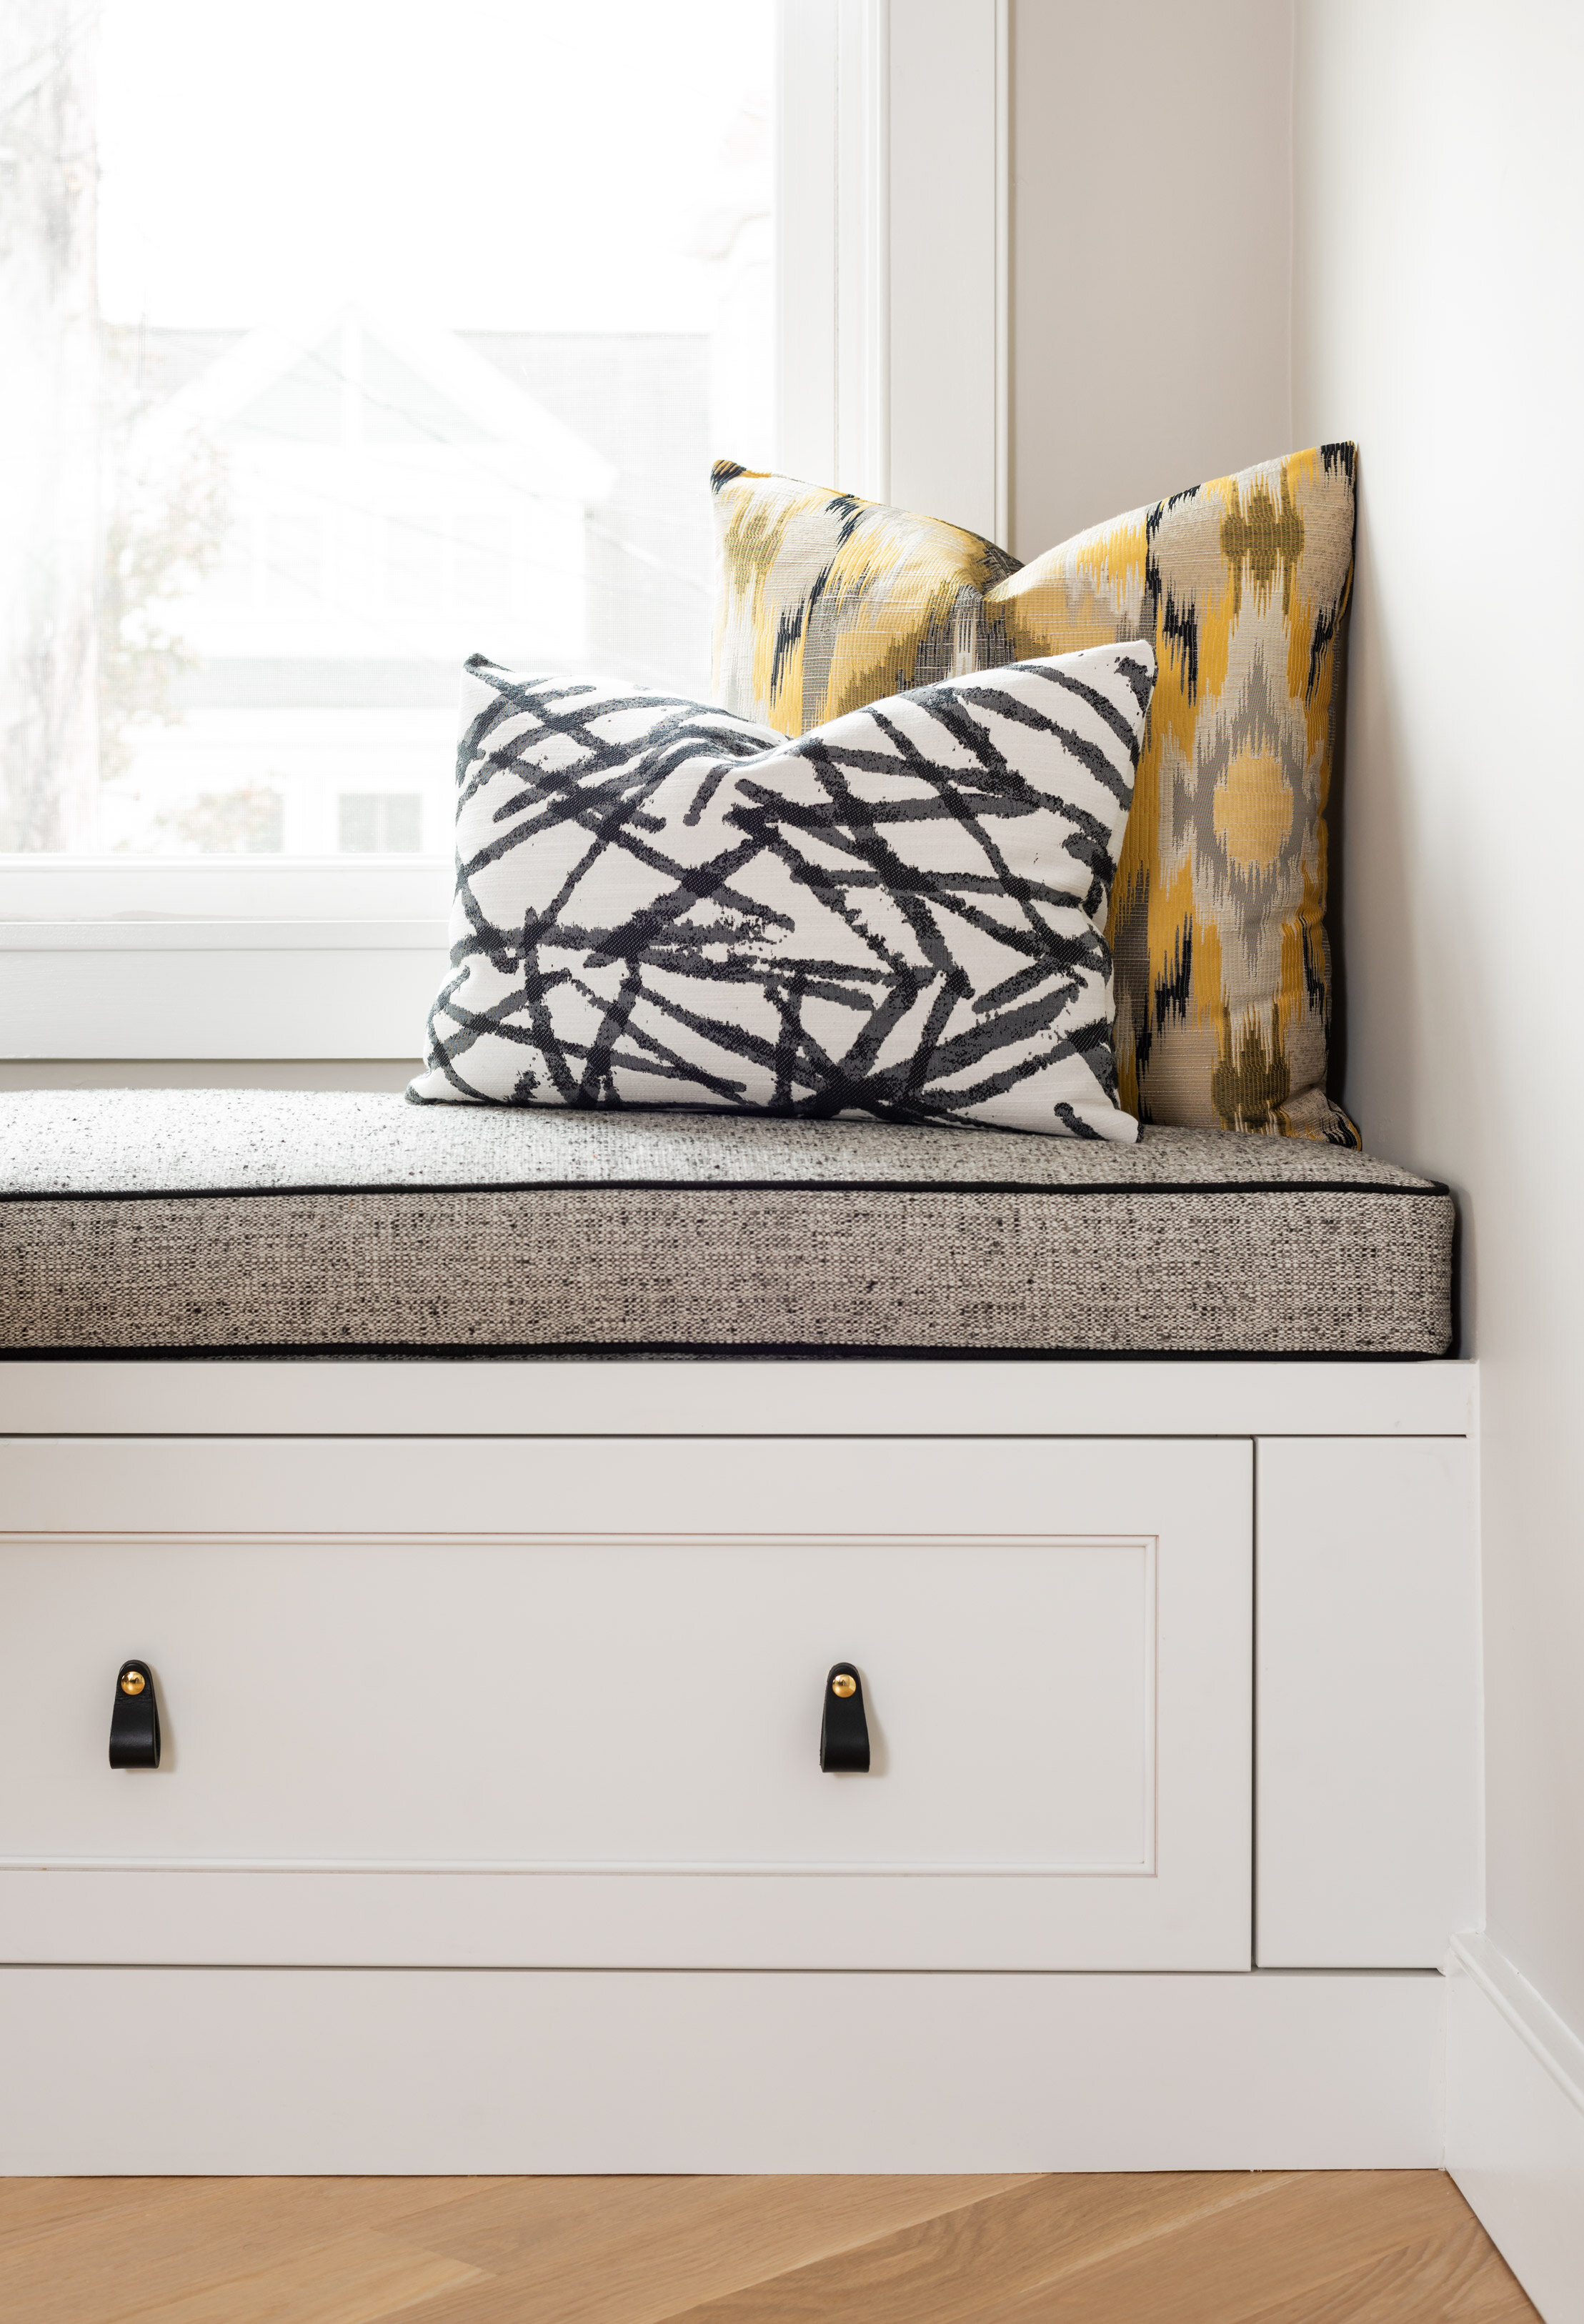 design 2 order julie h sheridan interior design family focused minimalist design bench and pillow details.jpg